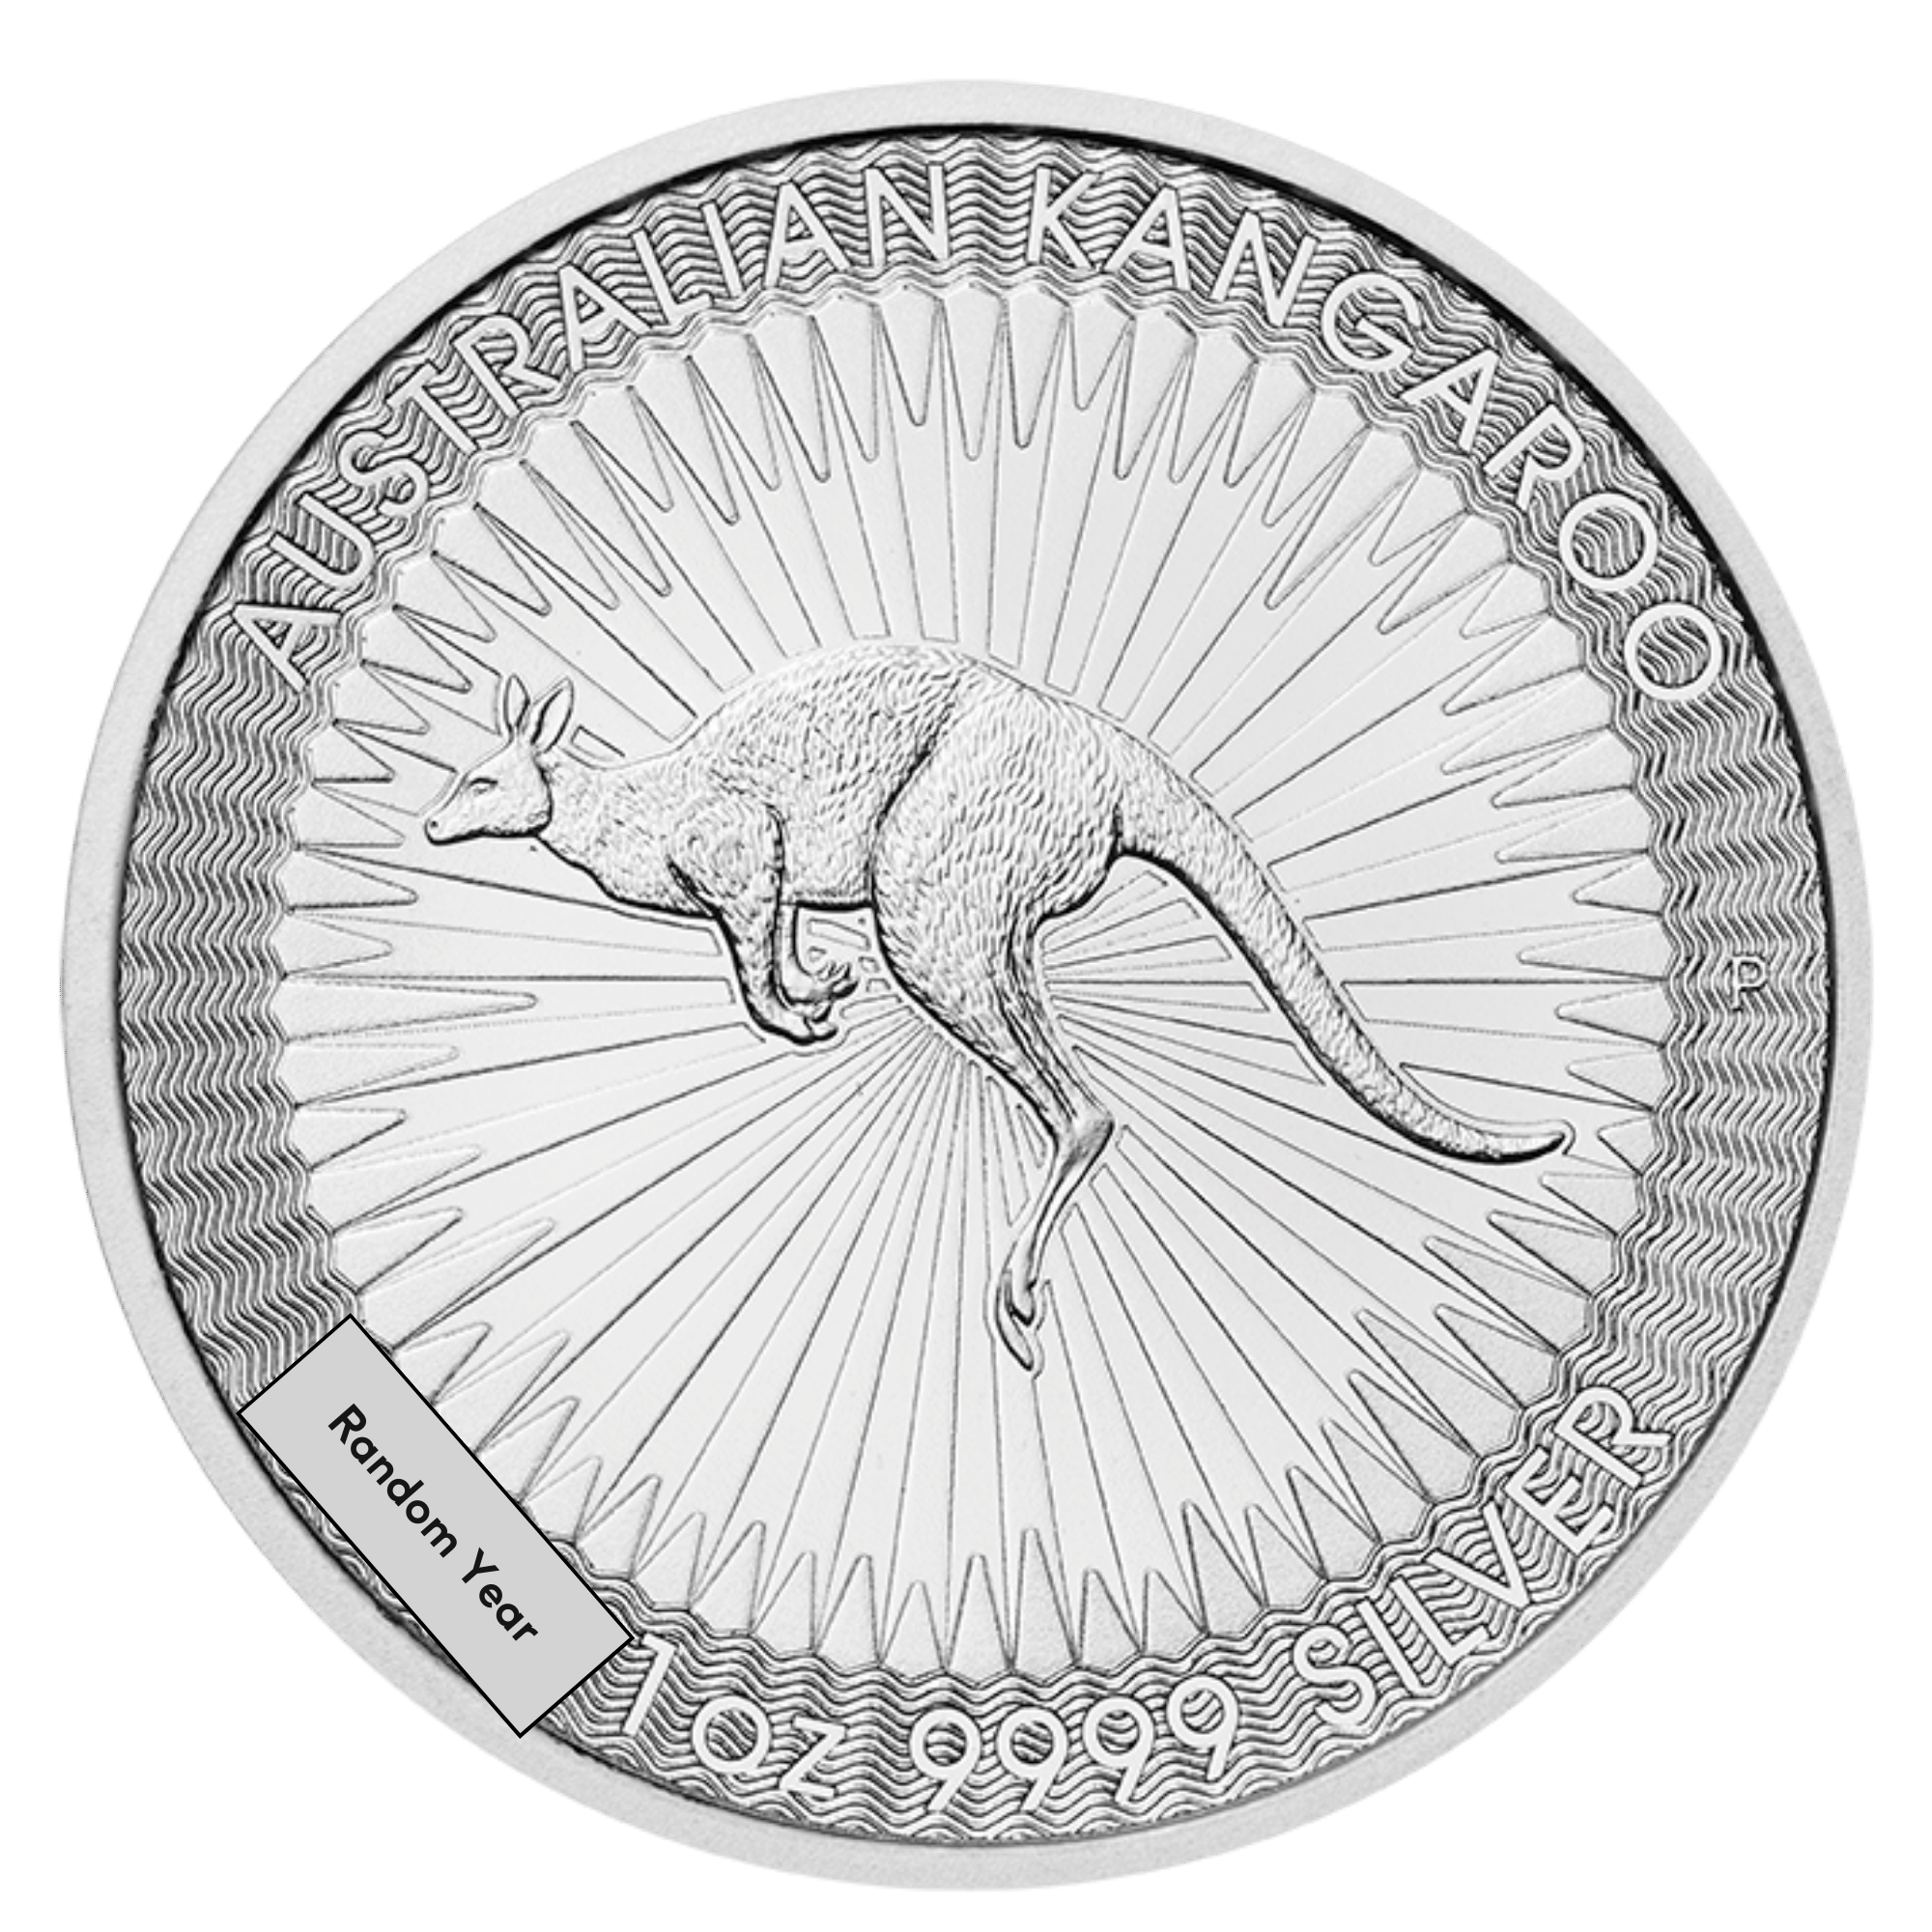 1oz Perth Mint Silver Kangaroo Coin (Random Years)